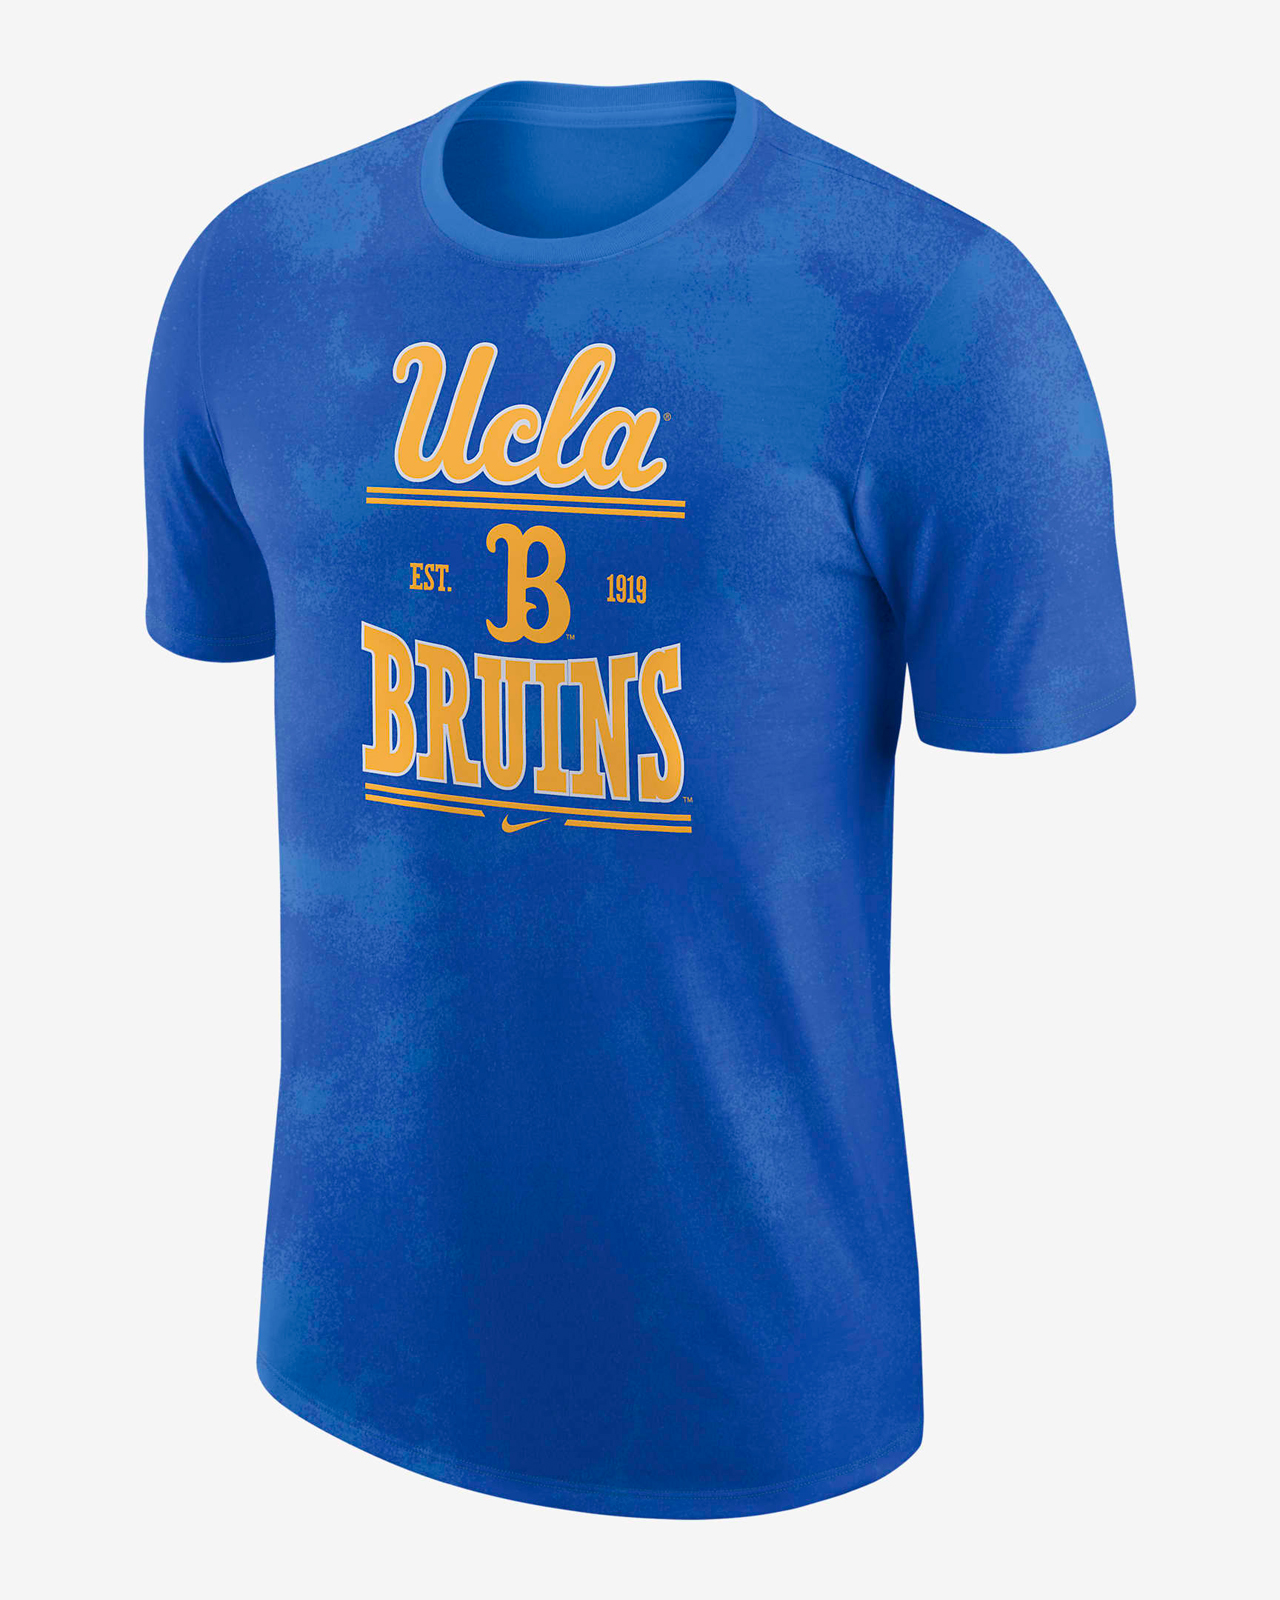 Nike-Dunk-Low-UCLA-Bruins-T-Shirt